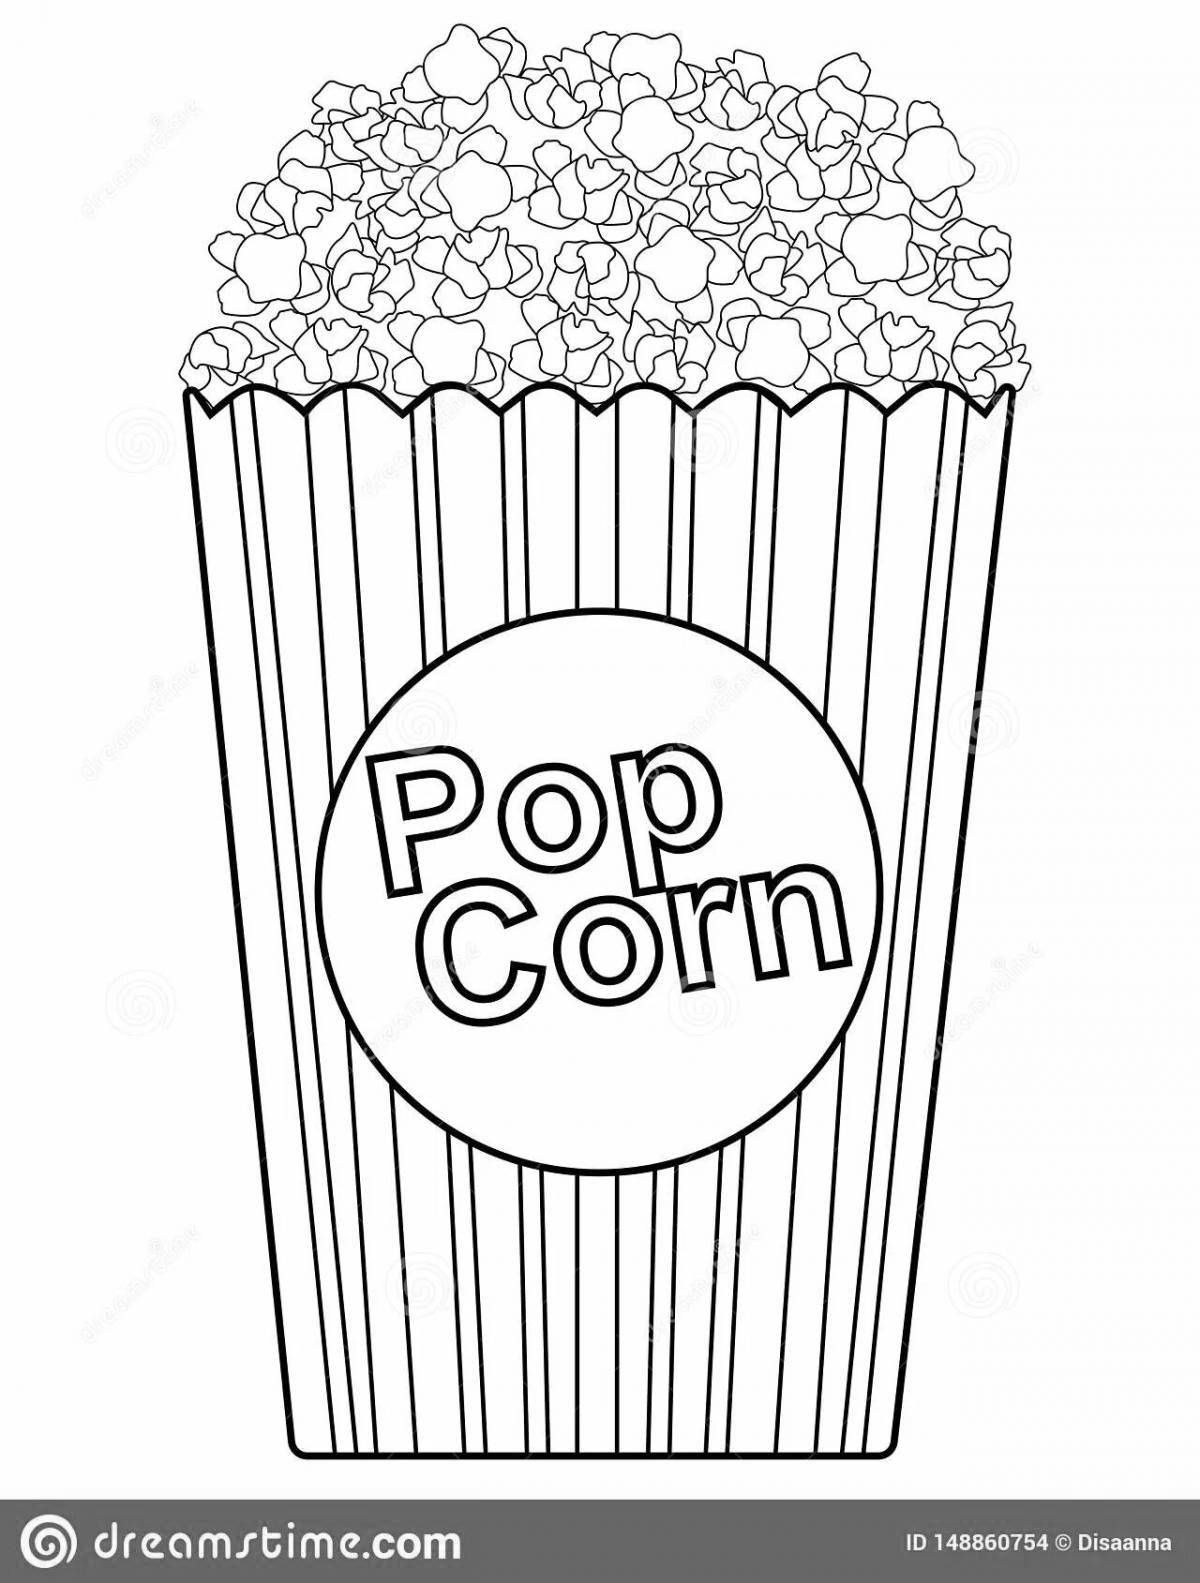 Fun coloring popcorn for kids